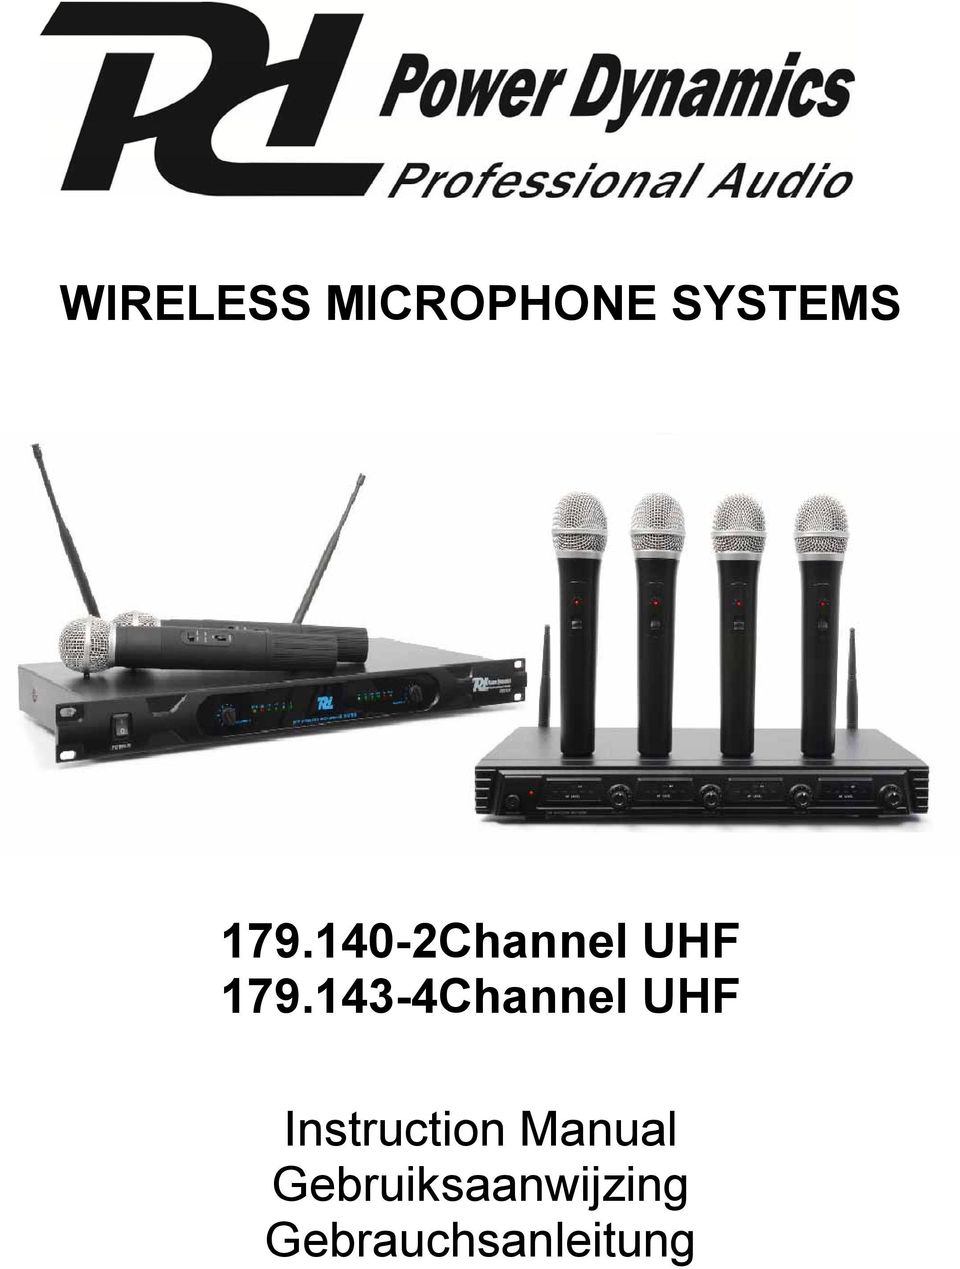 143-4Channel UHF Instruction